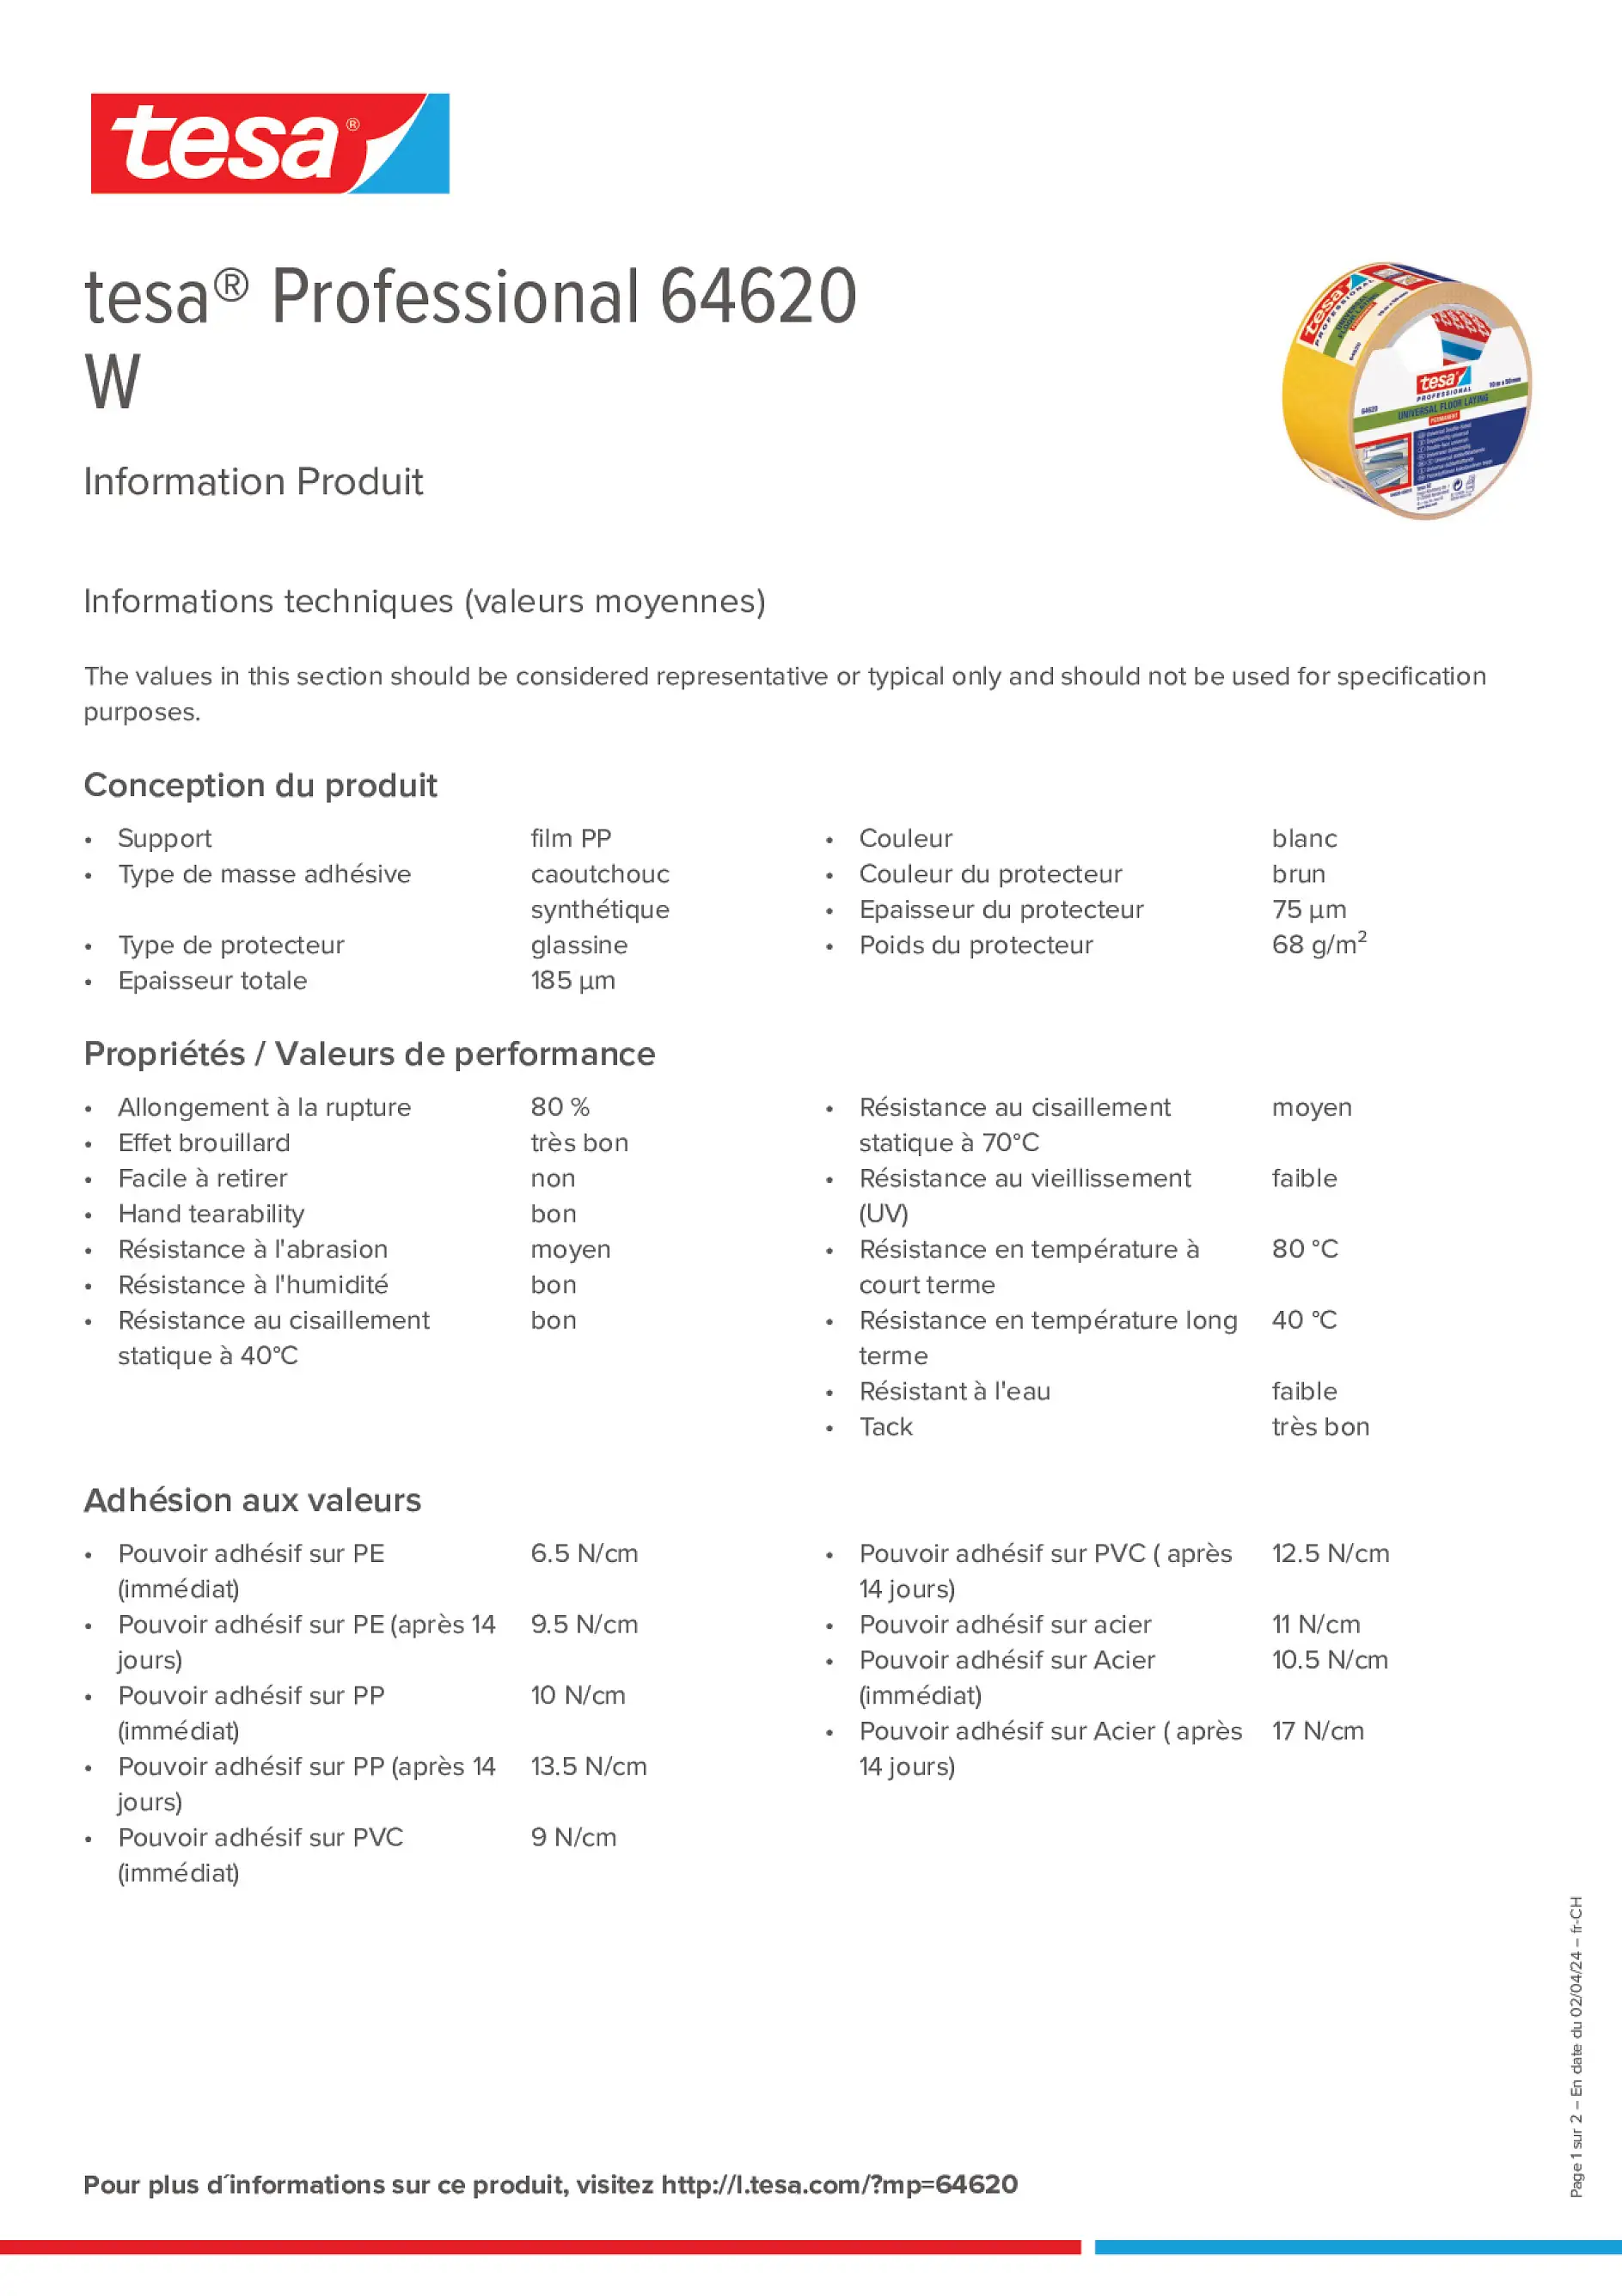 Product information_tesa® Professional 64620_de-CH_fr-CH